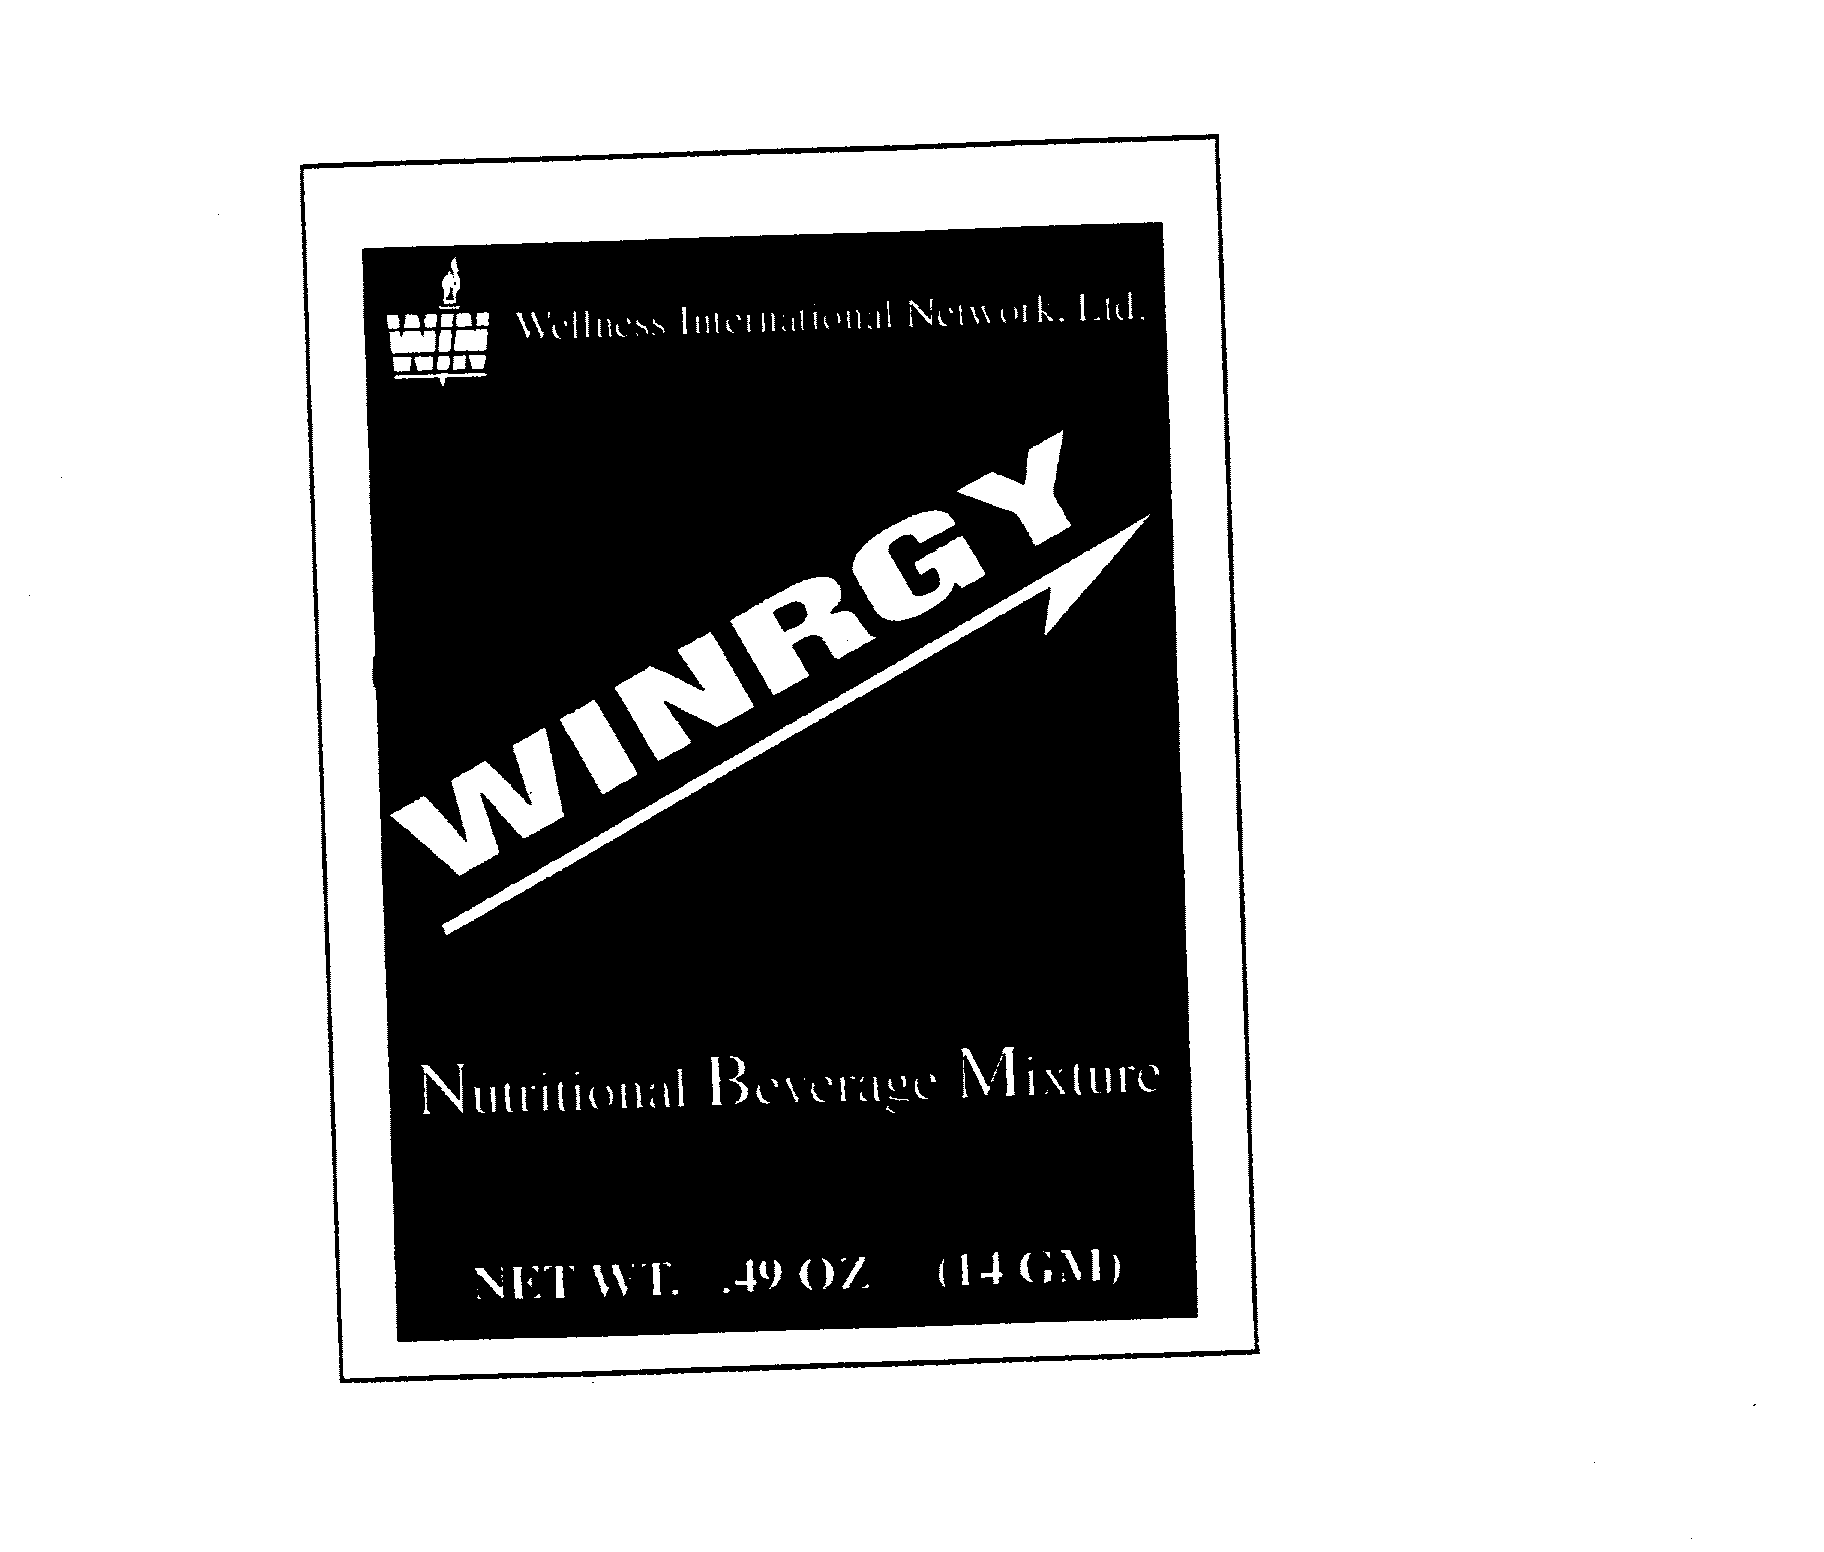  WIN WELLNESS INTERNATIONAL NETWORK, LTD. WINRGY NUTRITIONAL BEVERAGE MIXTURE NET WT. .49 OZ (14 GM)